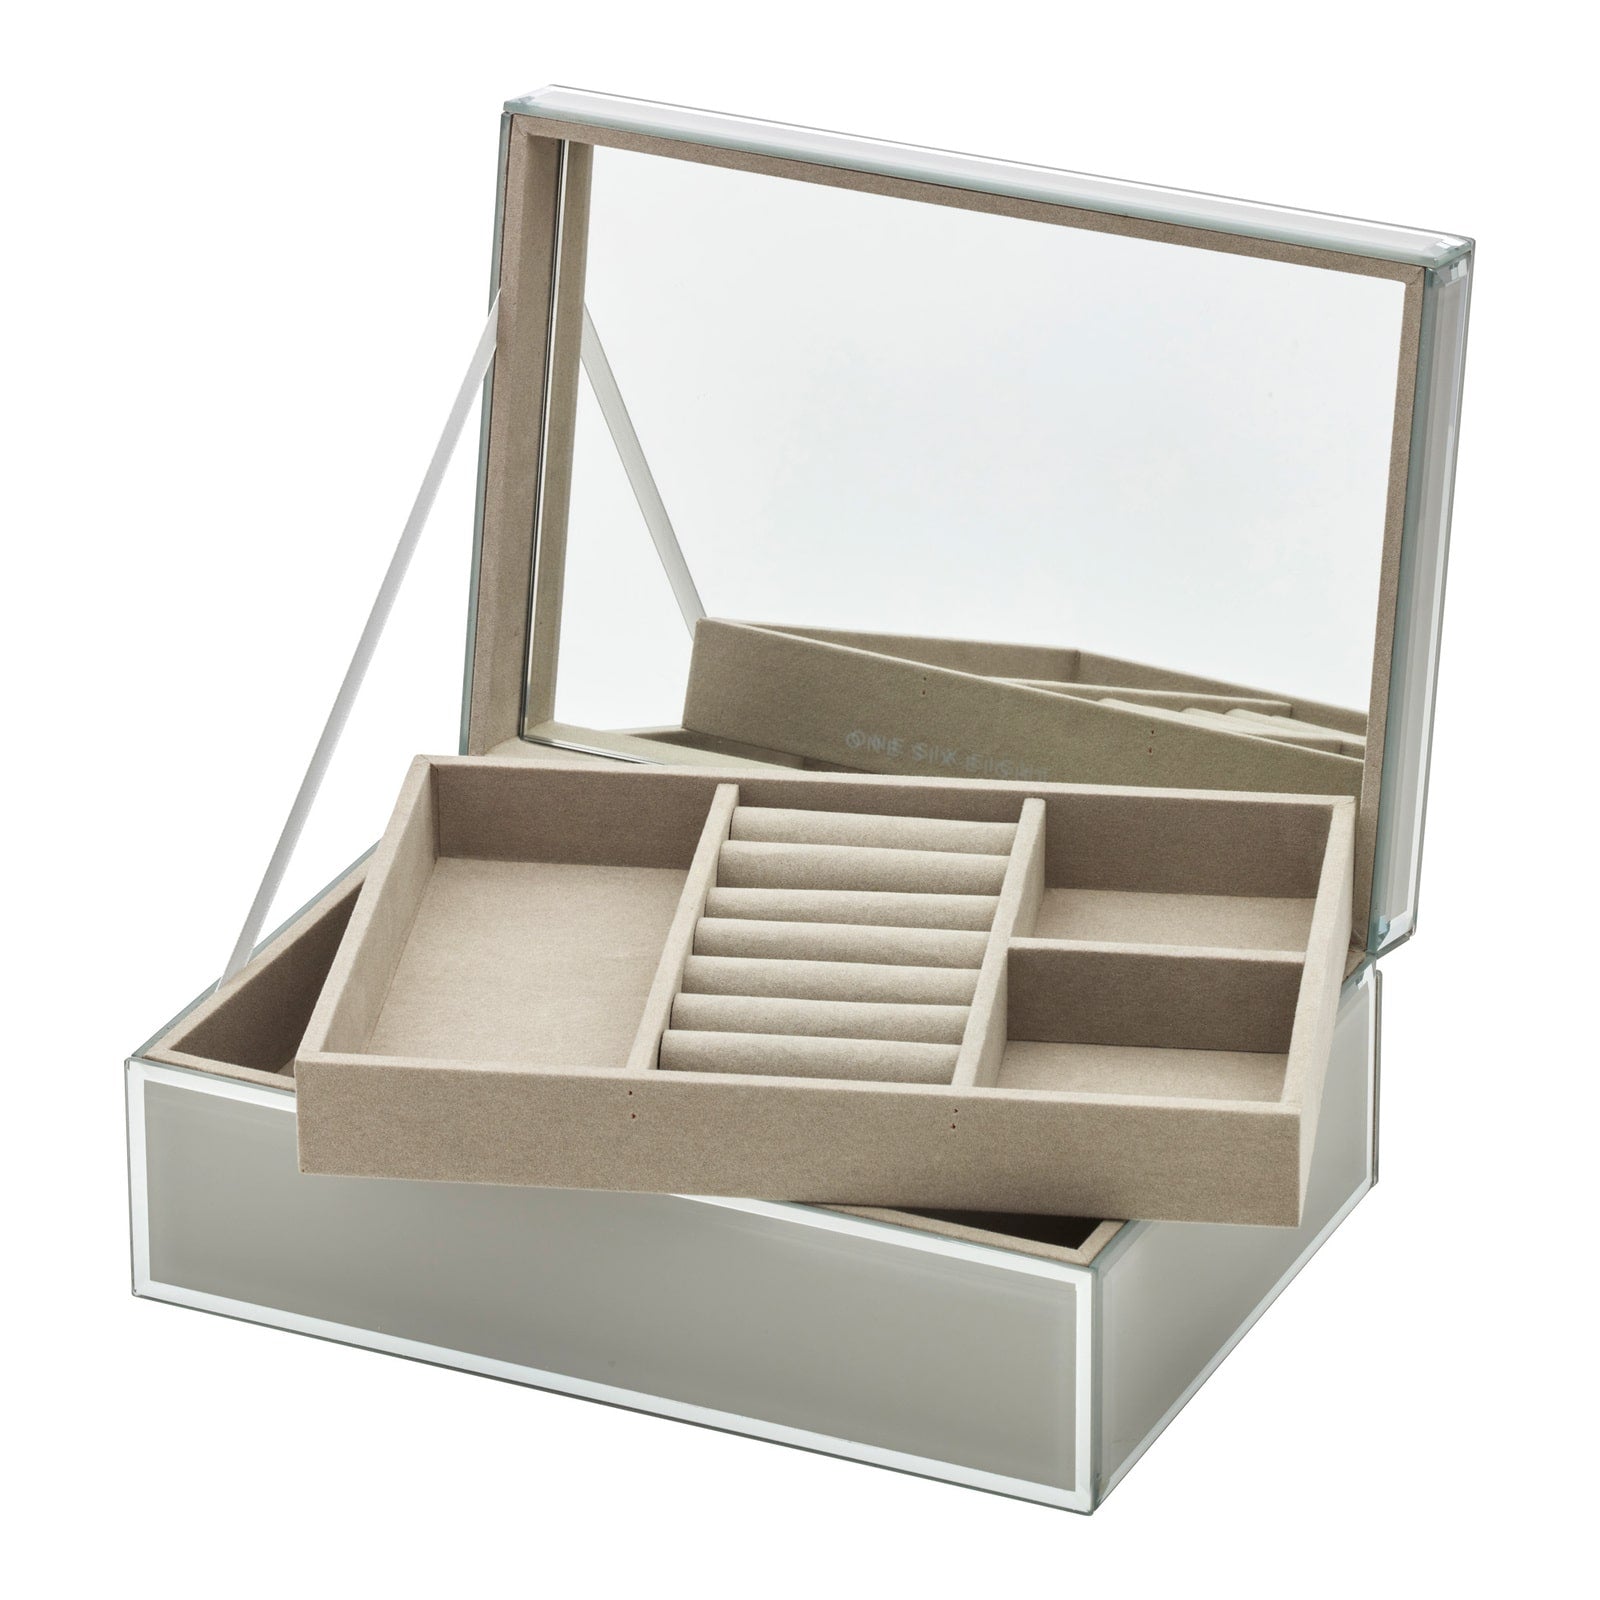 Sara Large Jewellery Box - cool grey - box open, showing tray